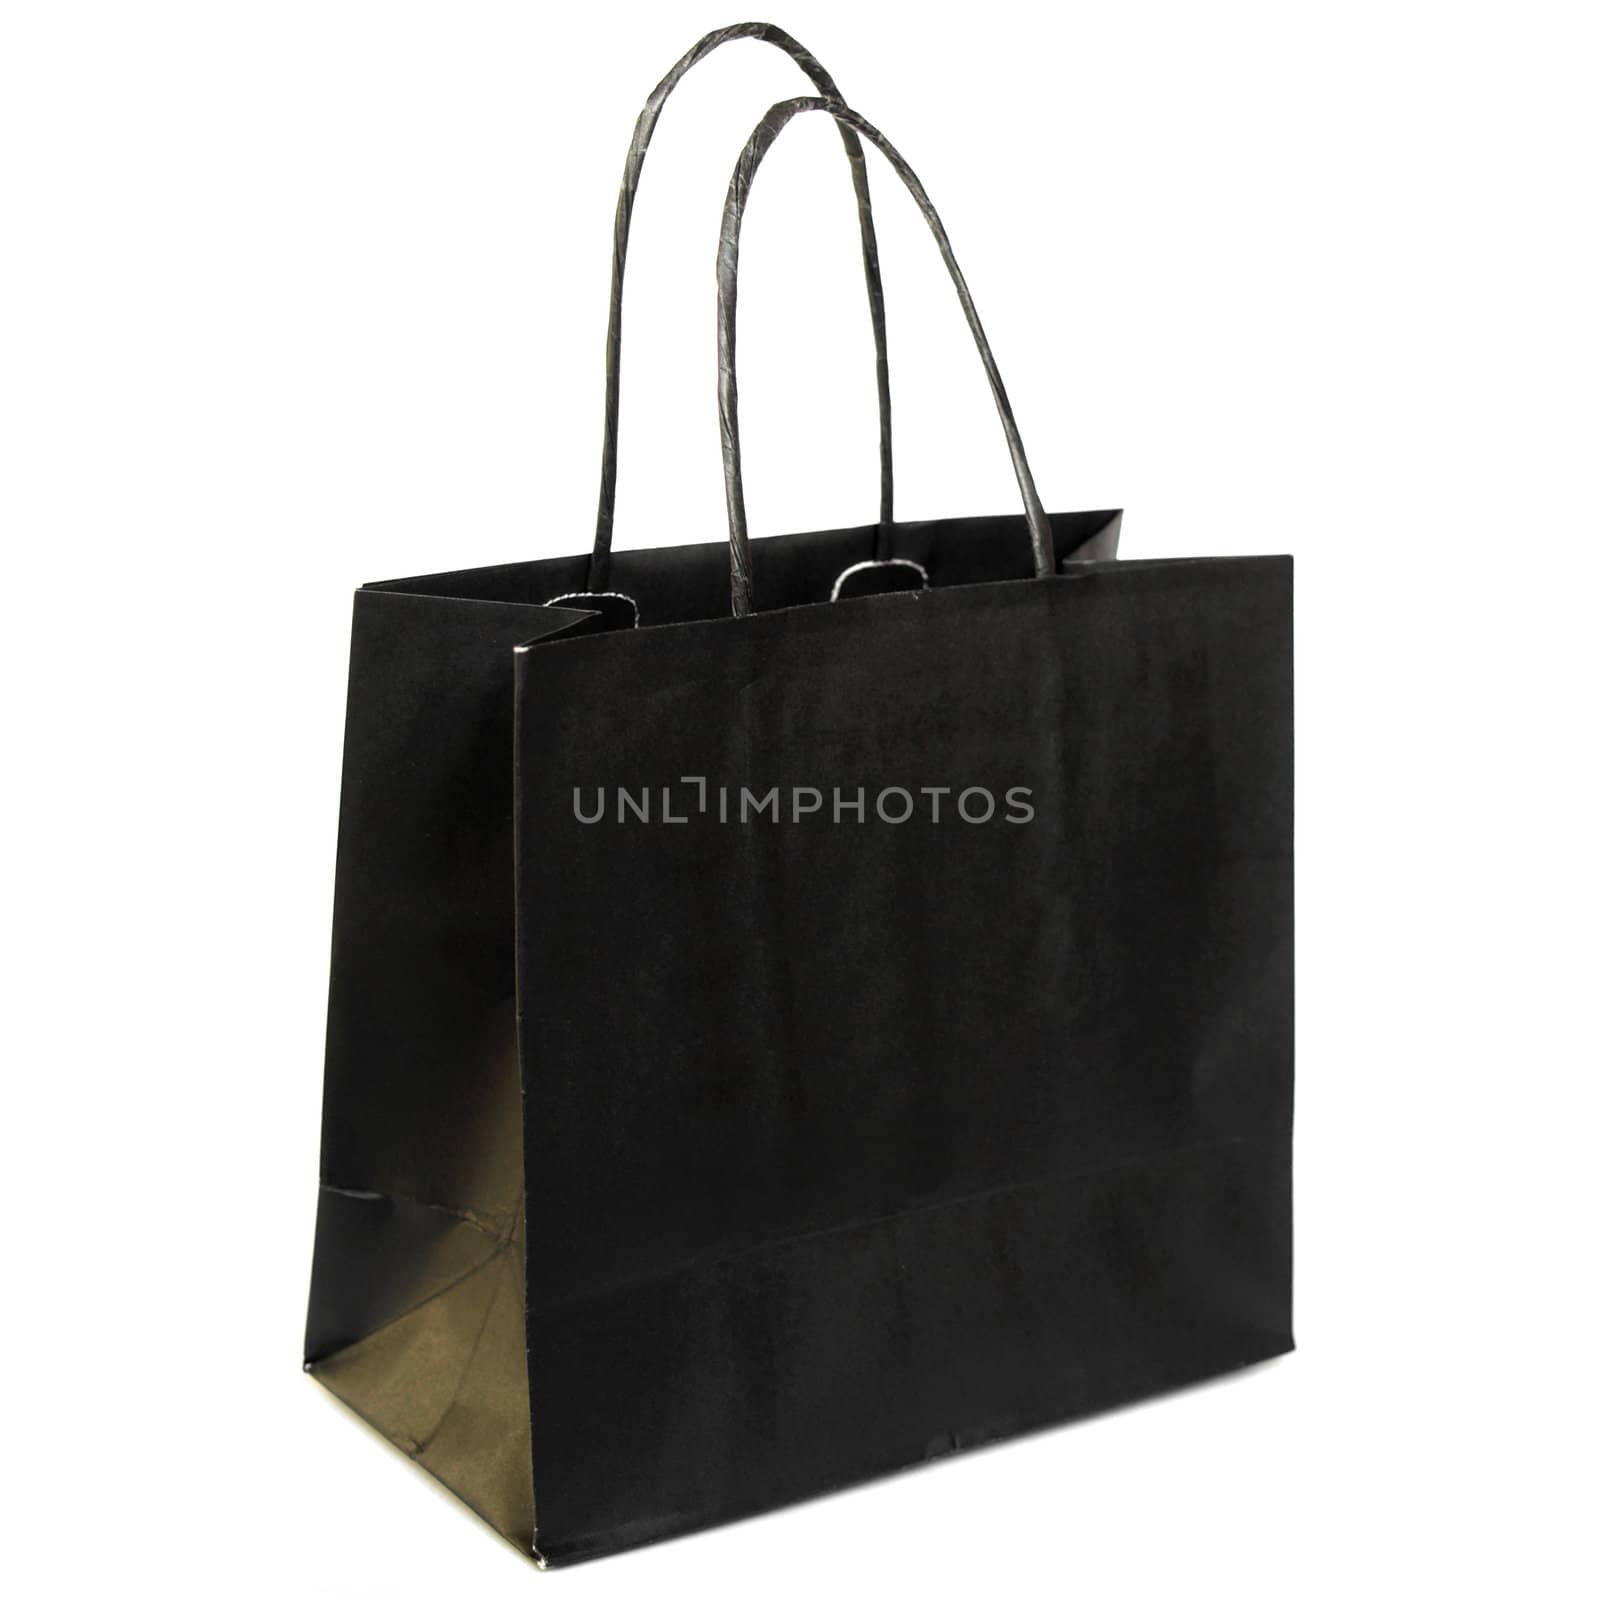 Shopper bag by claudiodivizia